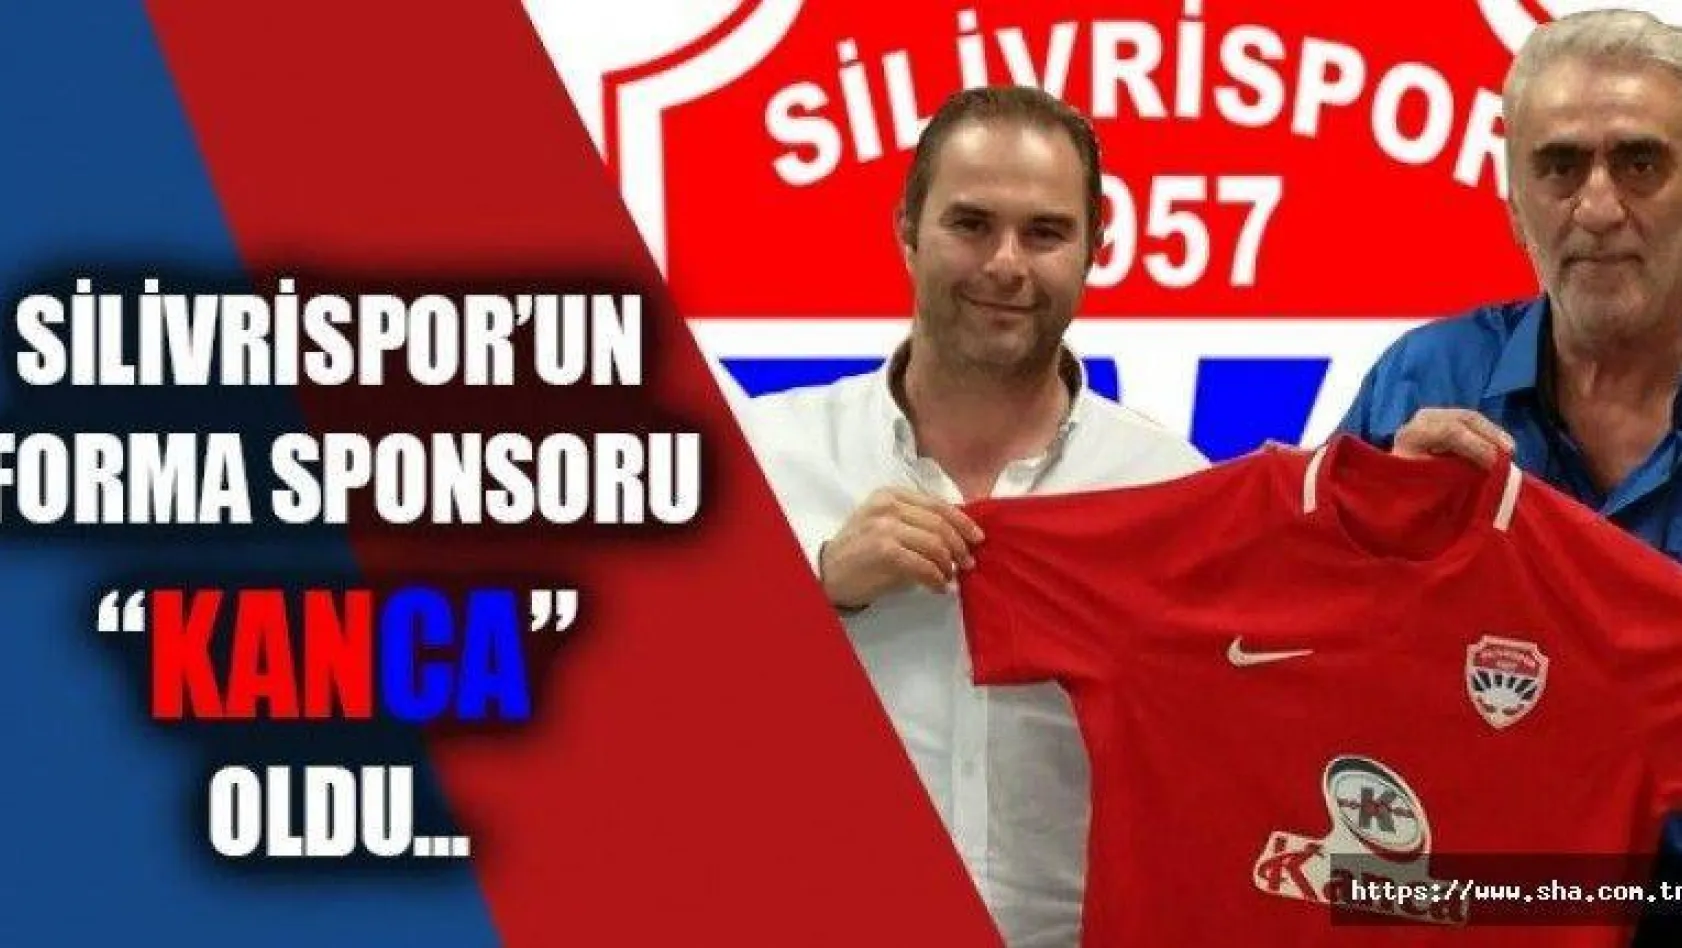 Kancıoğlu Otomotiv Silivrispor'un ana sponsoru oldu